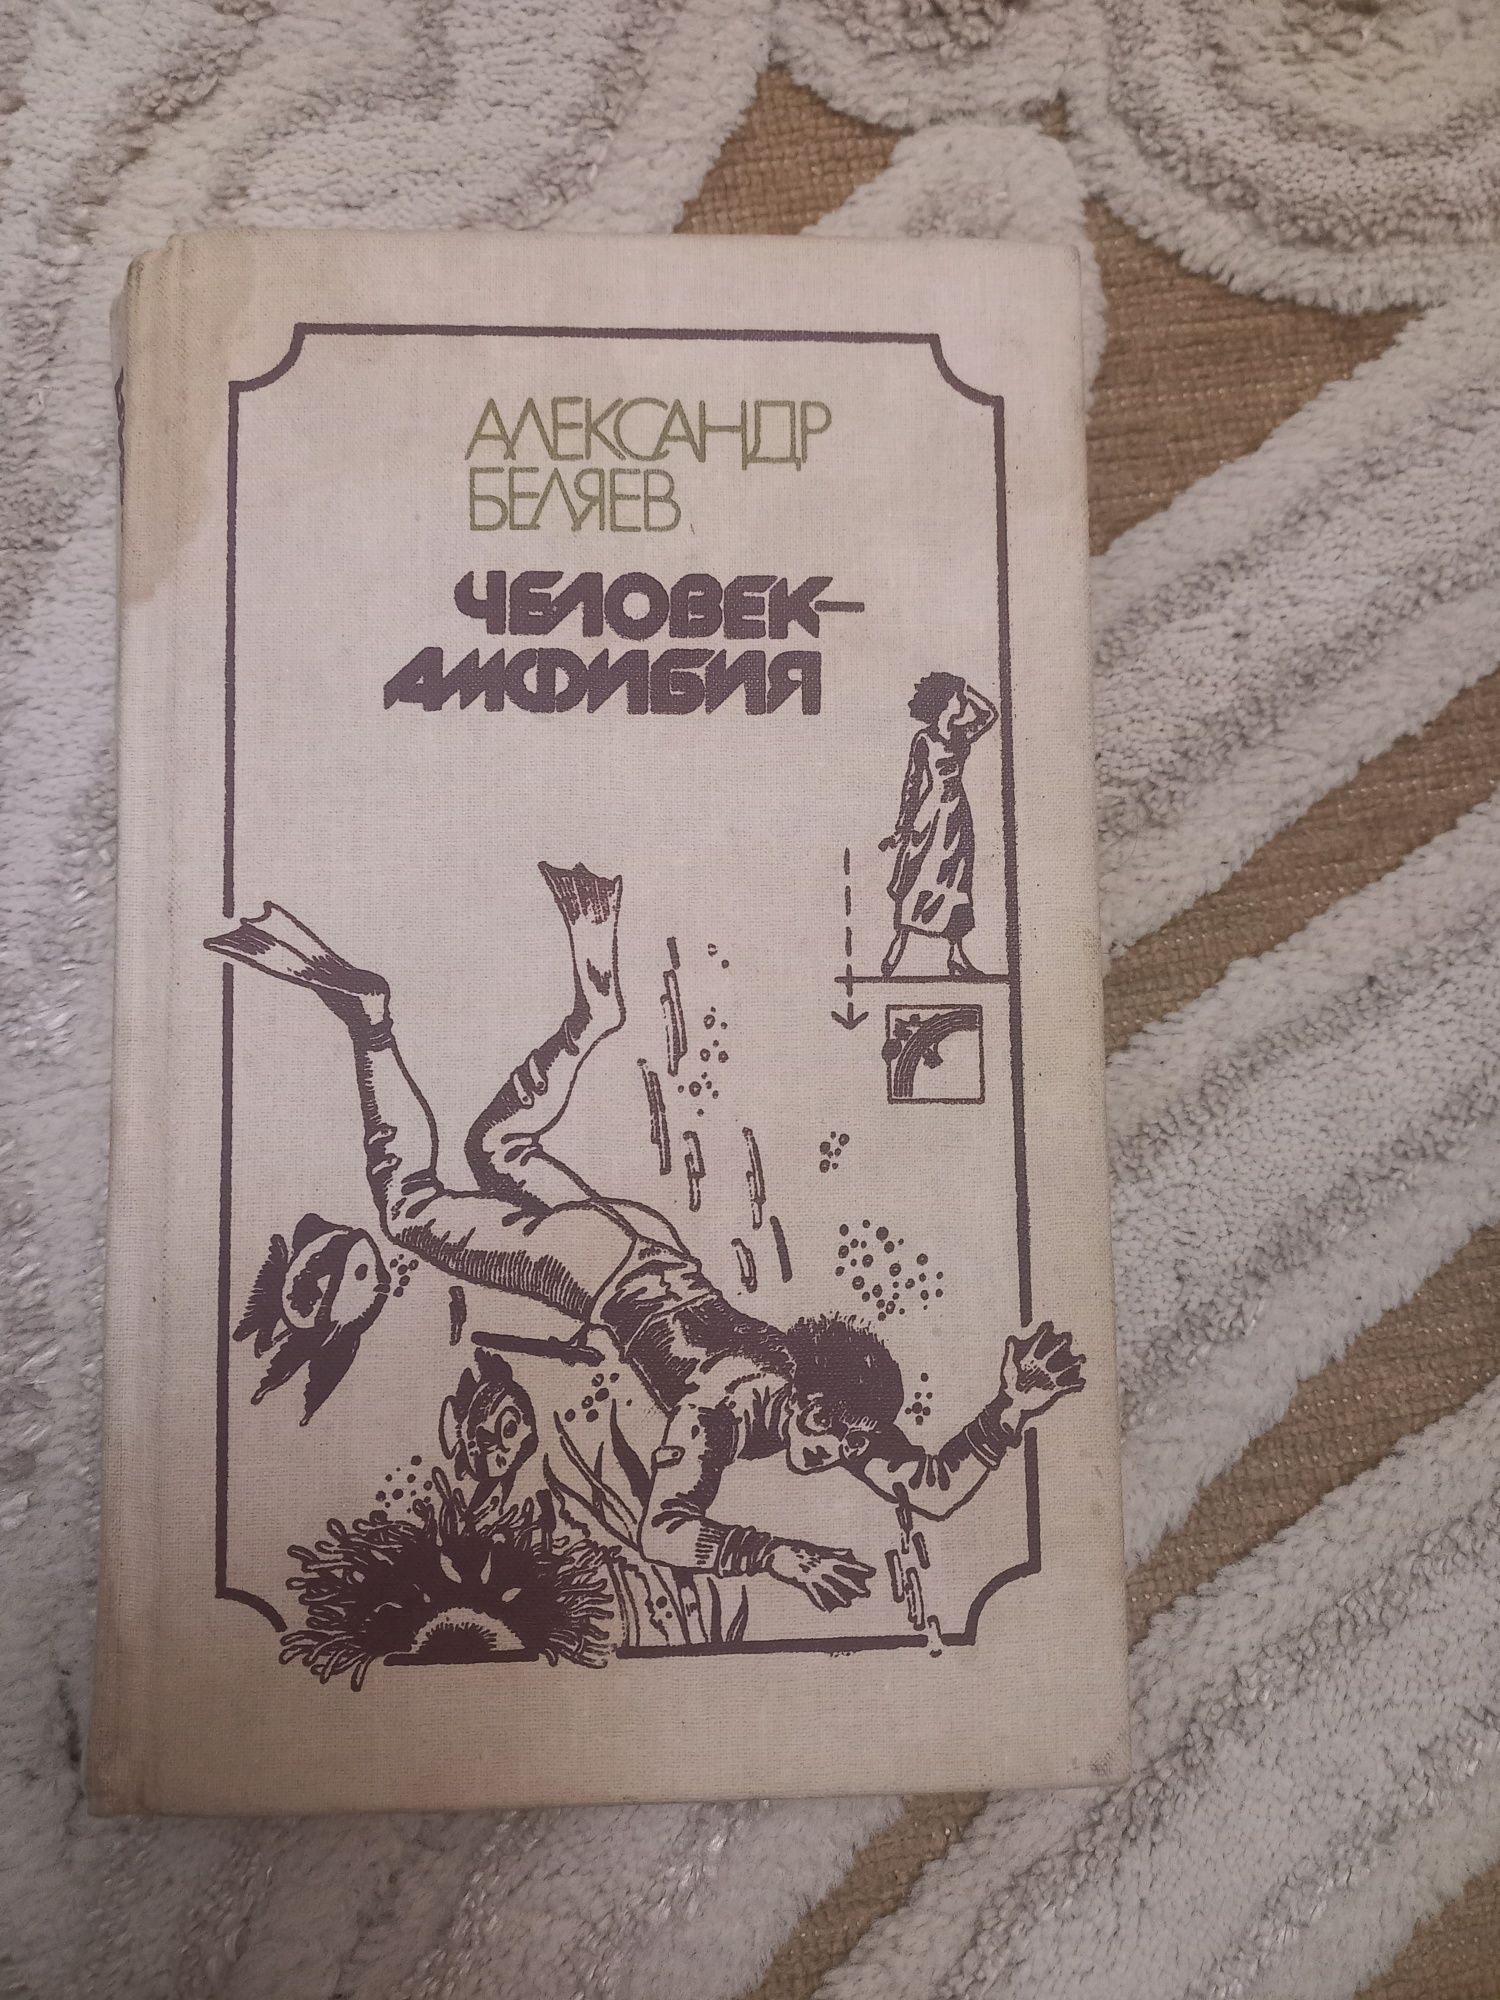 Книга Александр Беляев "Человек-амфибия"